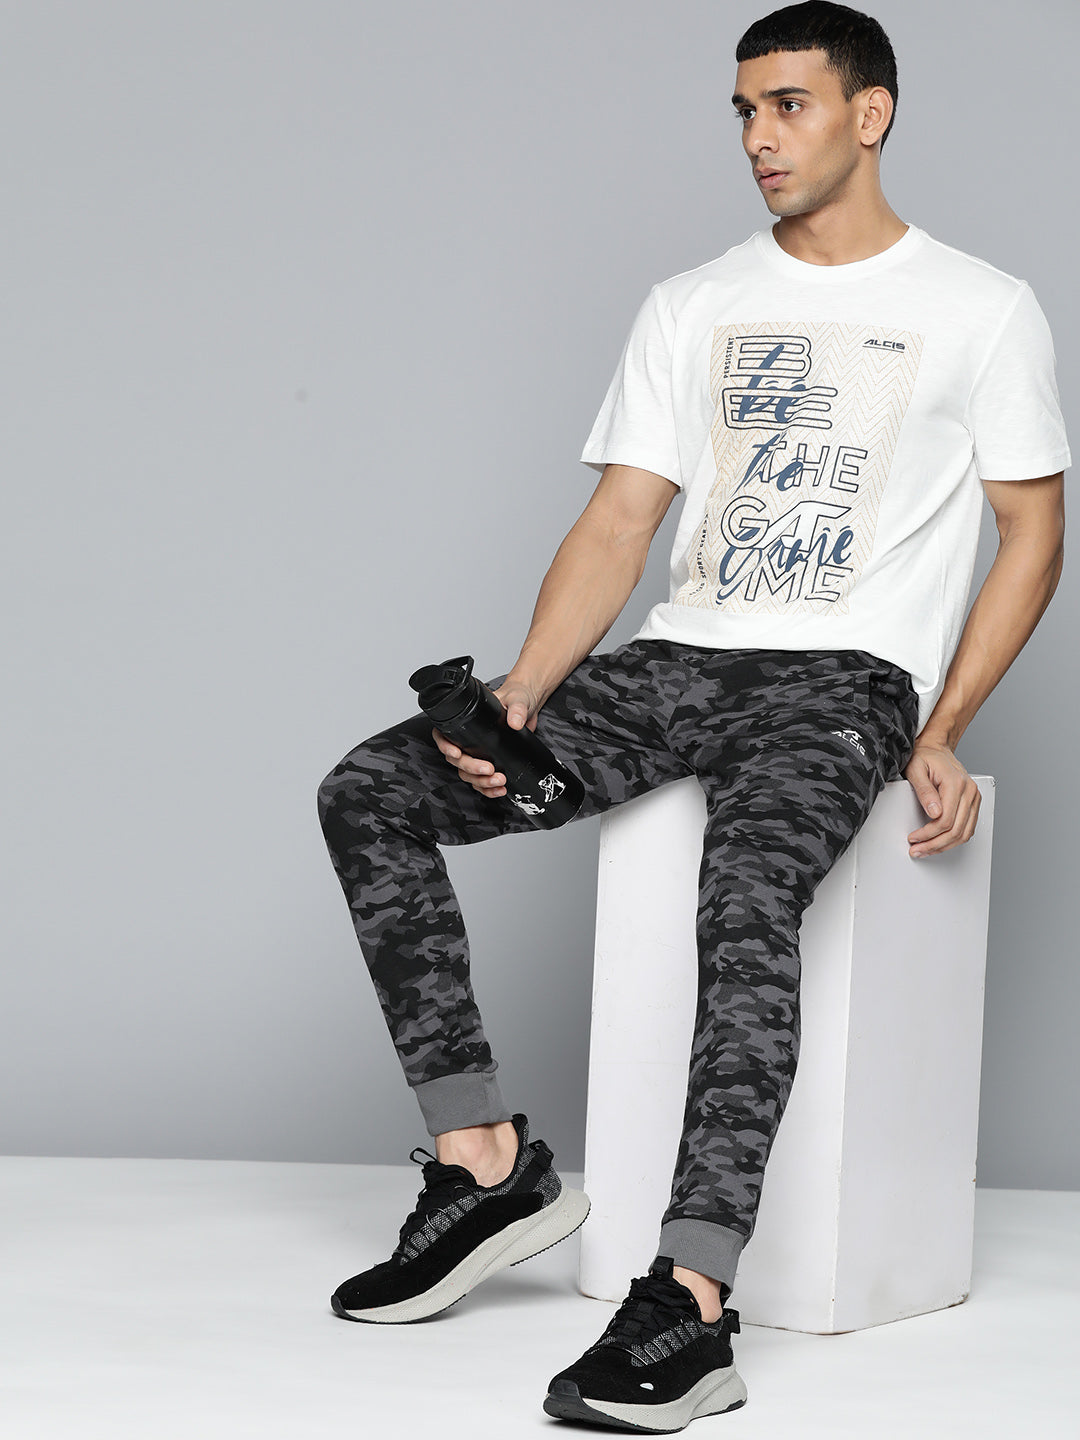 Alcis Men White & Beige Typography Printed Slim Fit T-shirt